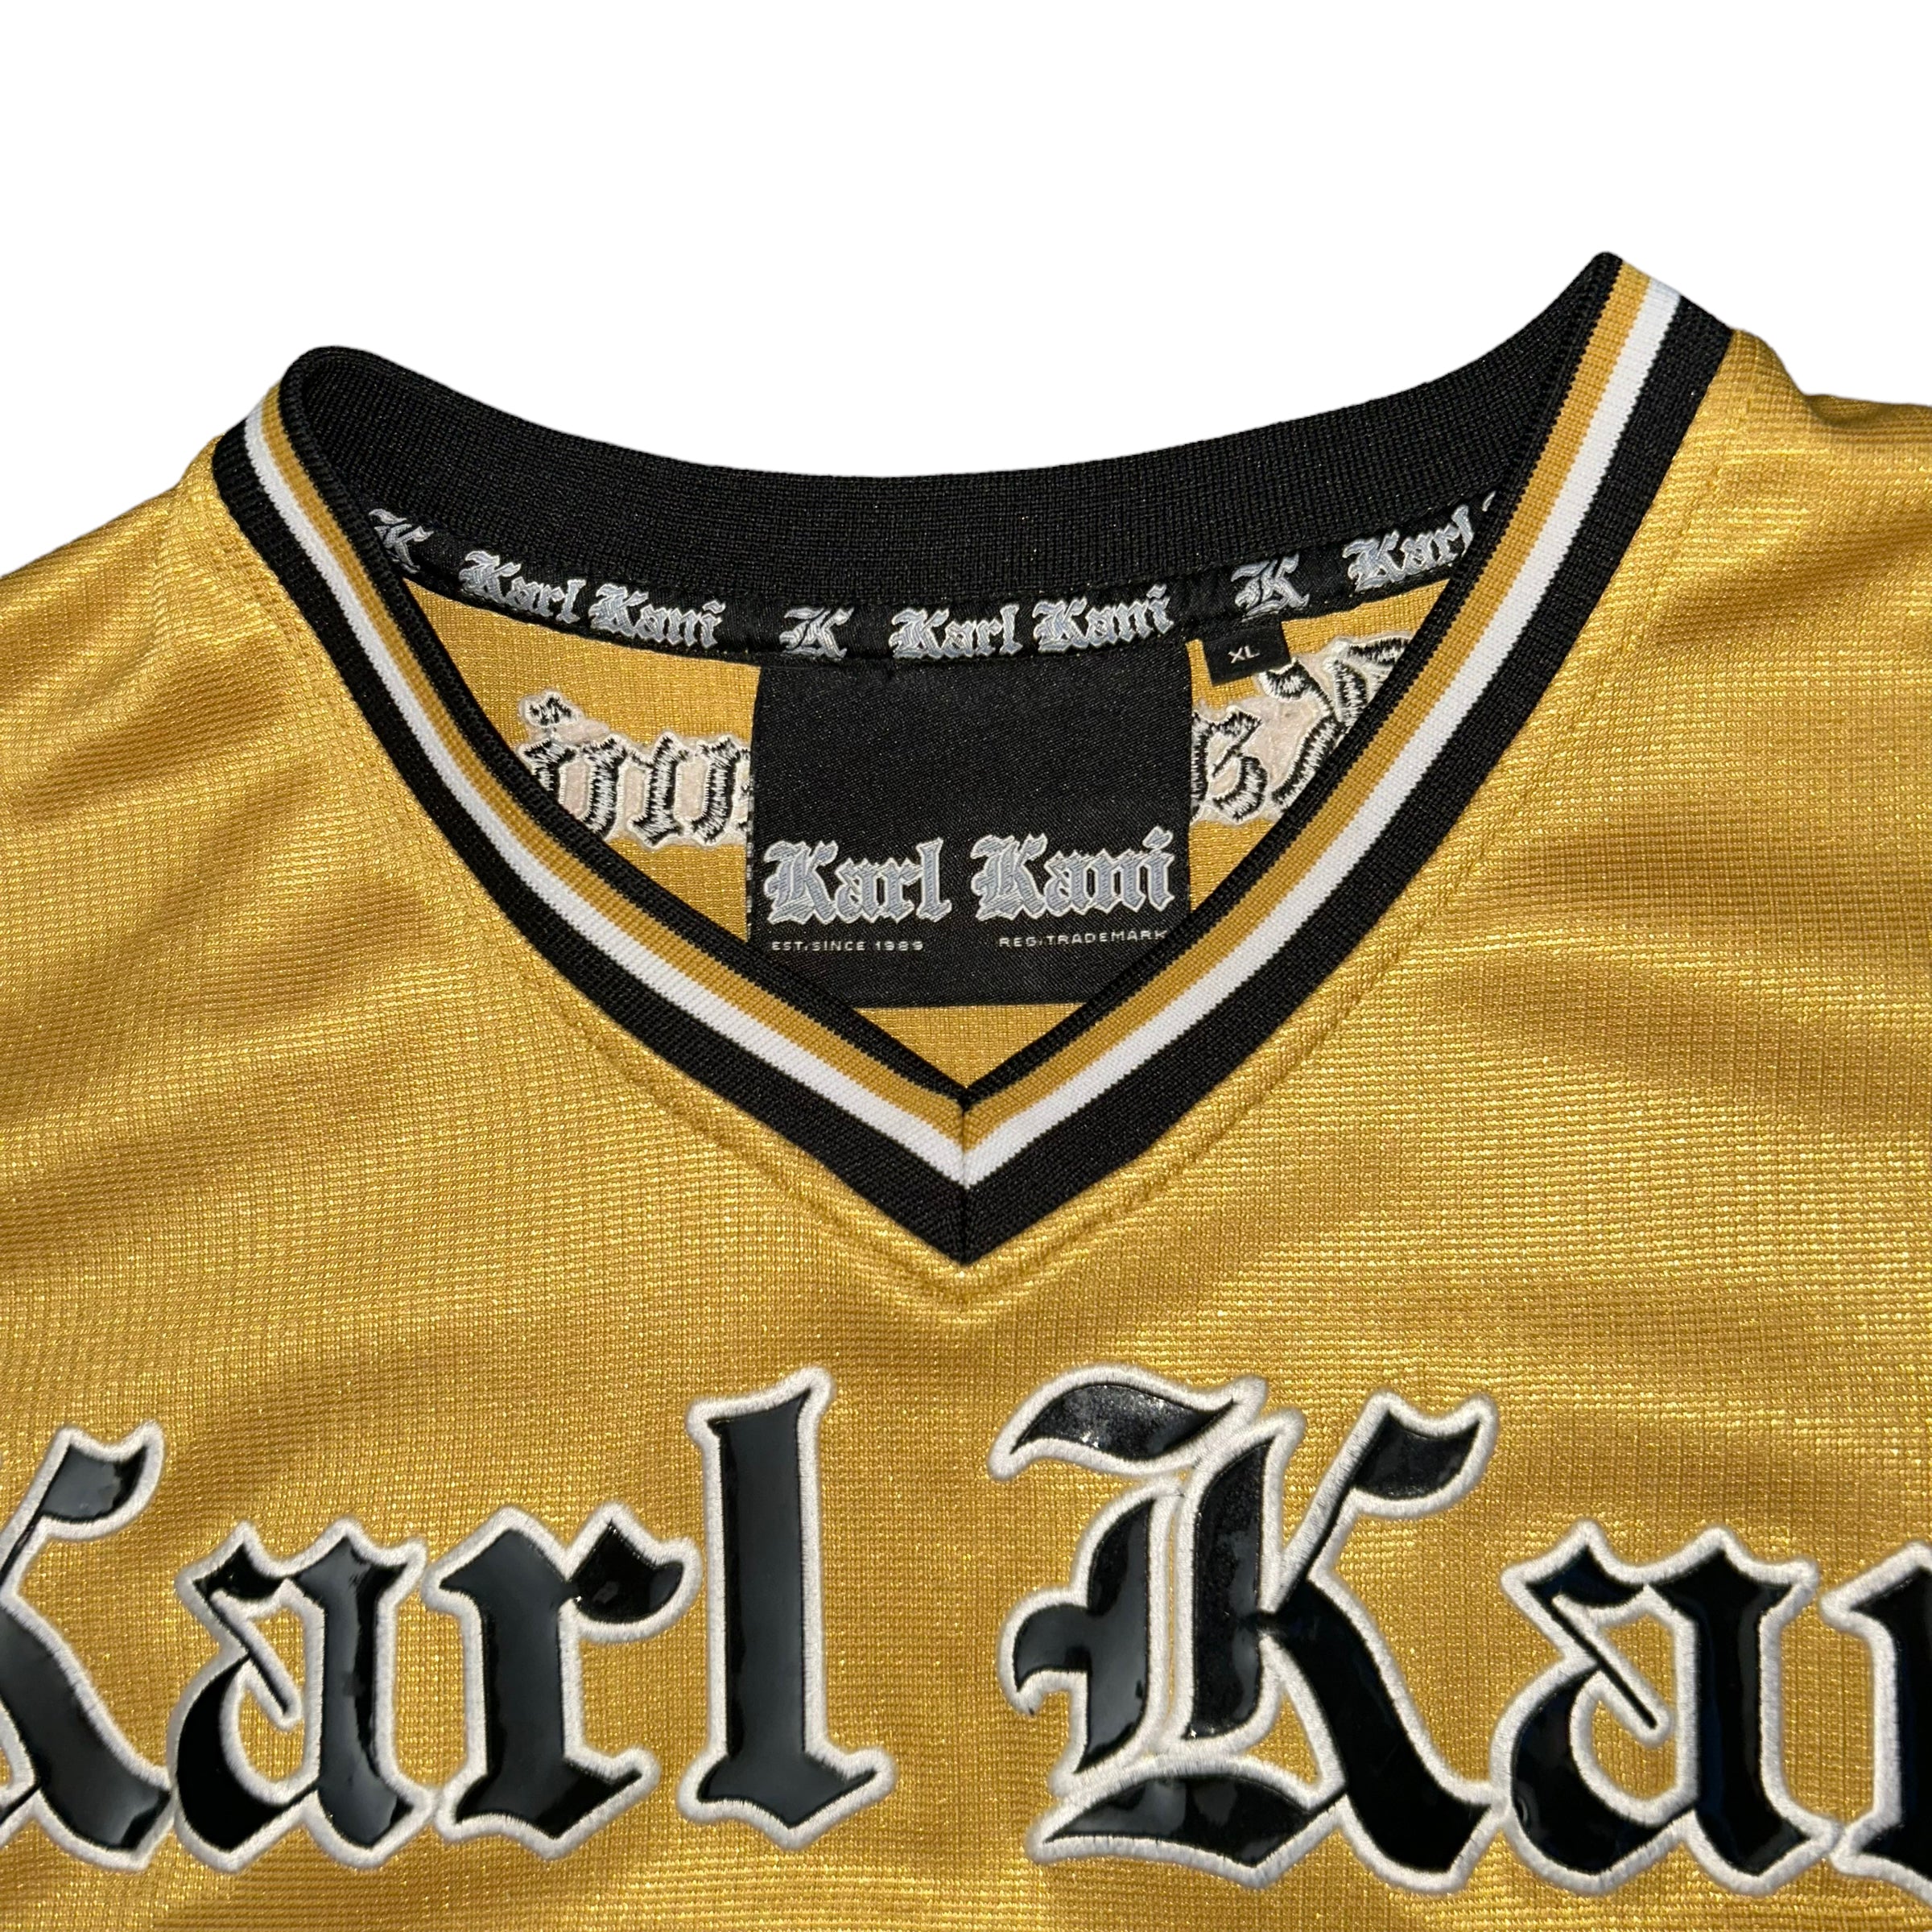 Karl Kani Long Beach California Vintage Jersey (XL)